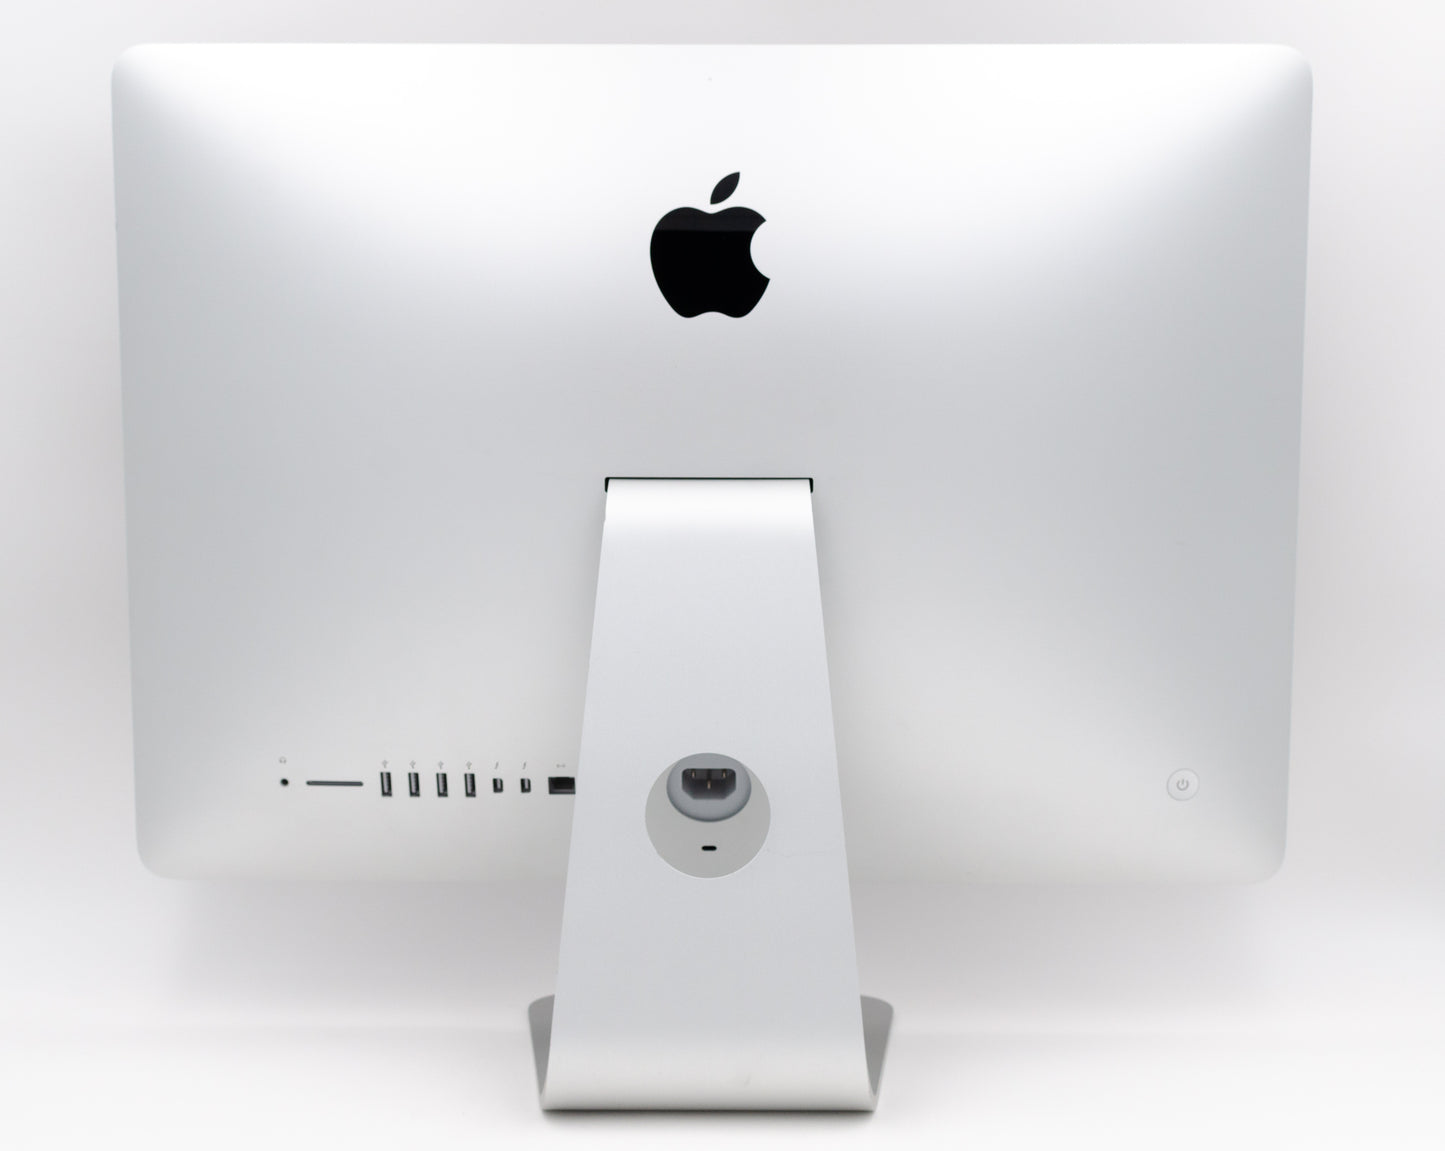 apple-early-2013-21.5-inch-imac-ultra-thin-a1418-aluminum-dci3 - 3.3ghz, 4gb ram, hd 4000 - 512mb gpu-4